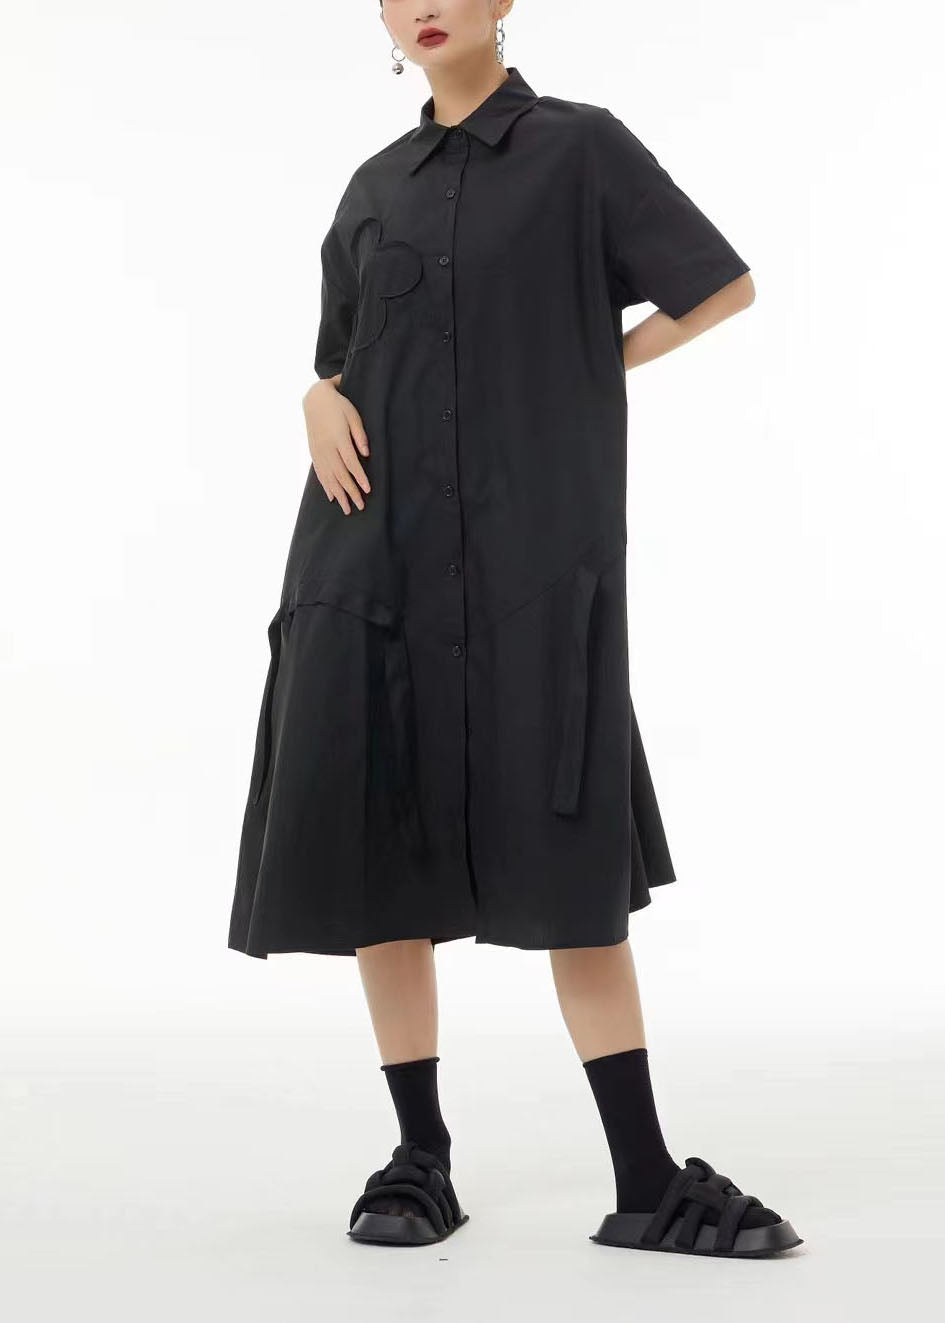 Boutique Black Peter Pan Collar Patchwork Cotton Long Dresses Summer TS1058